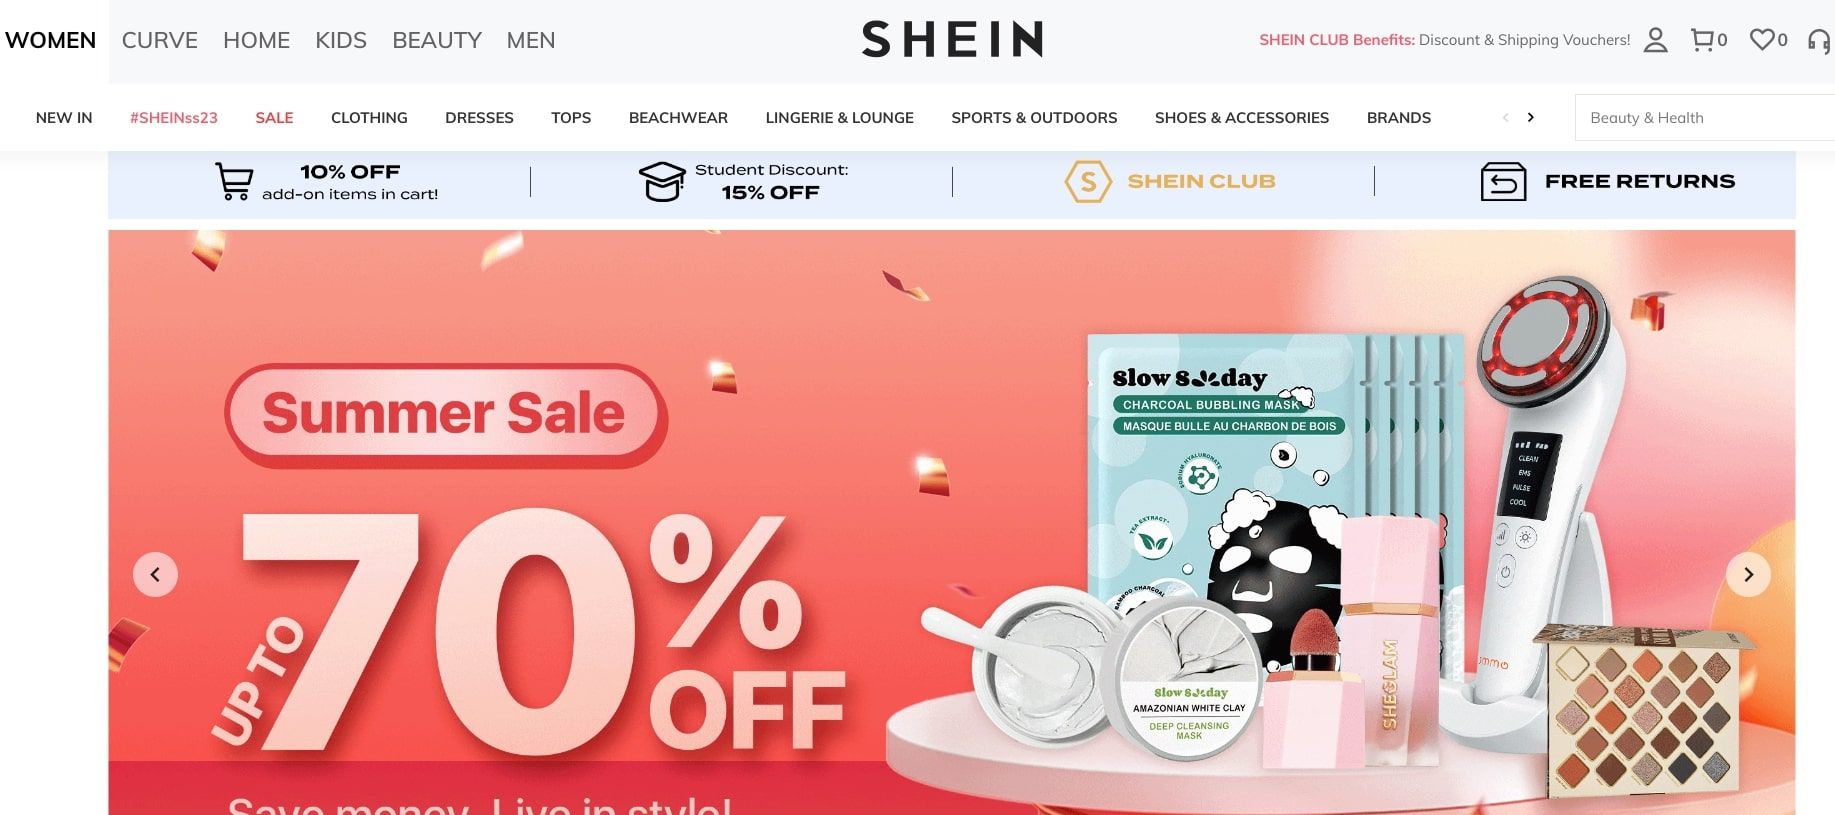 shein website homepage screenshot